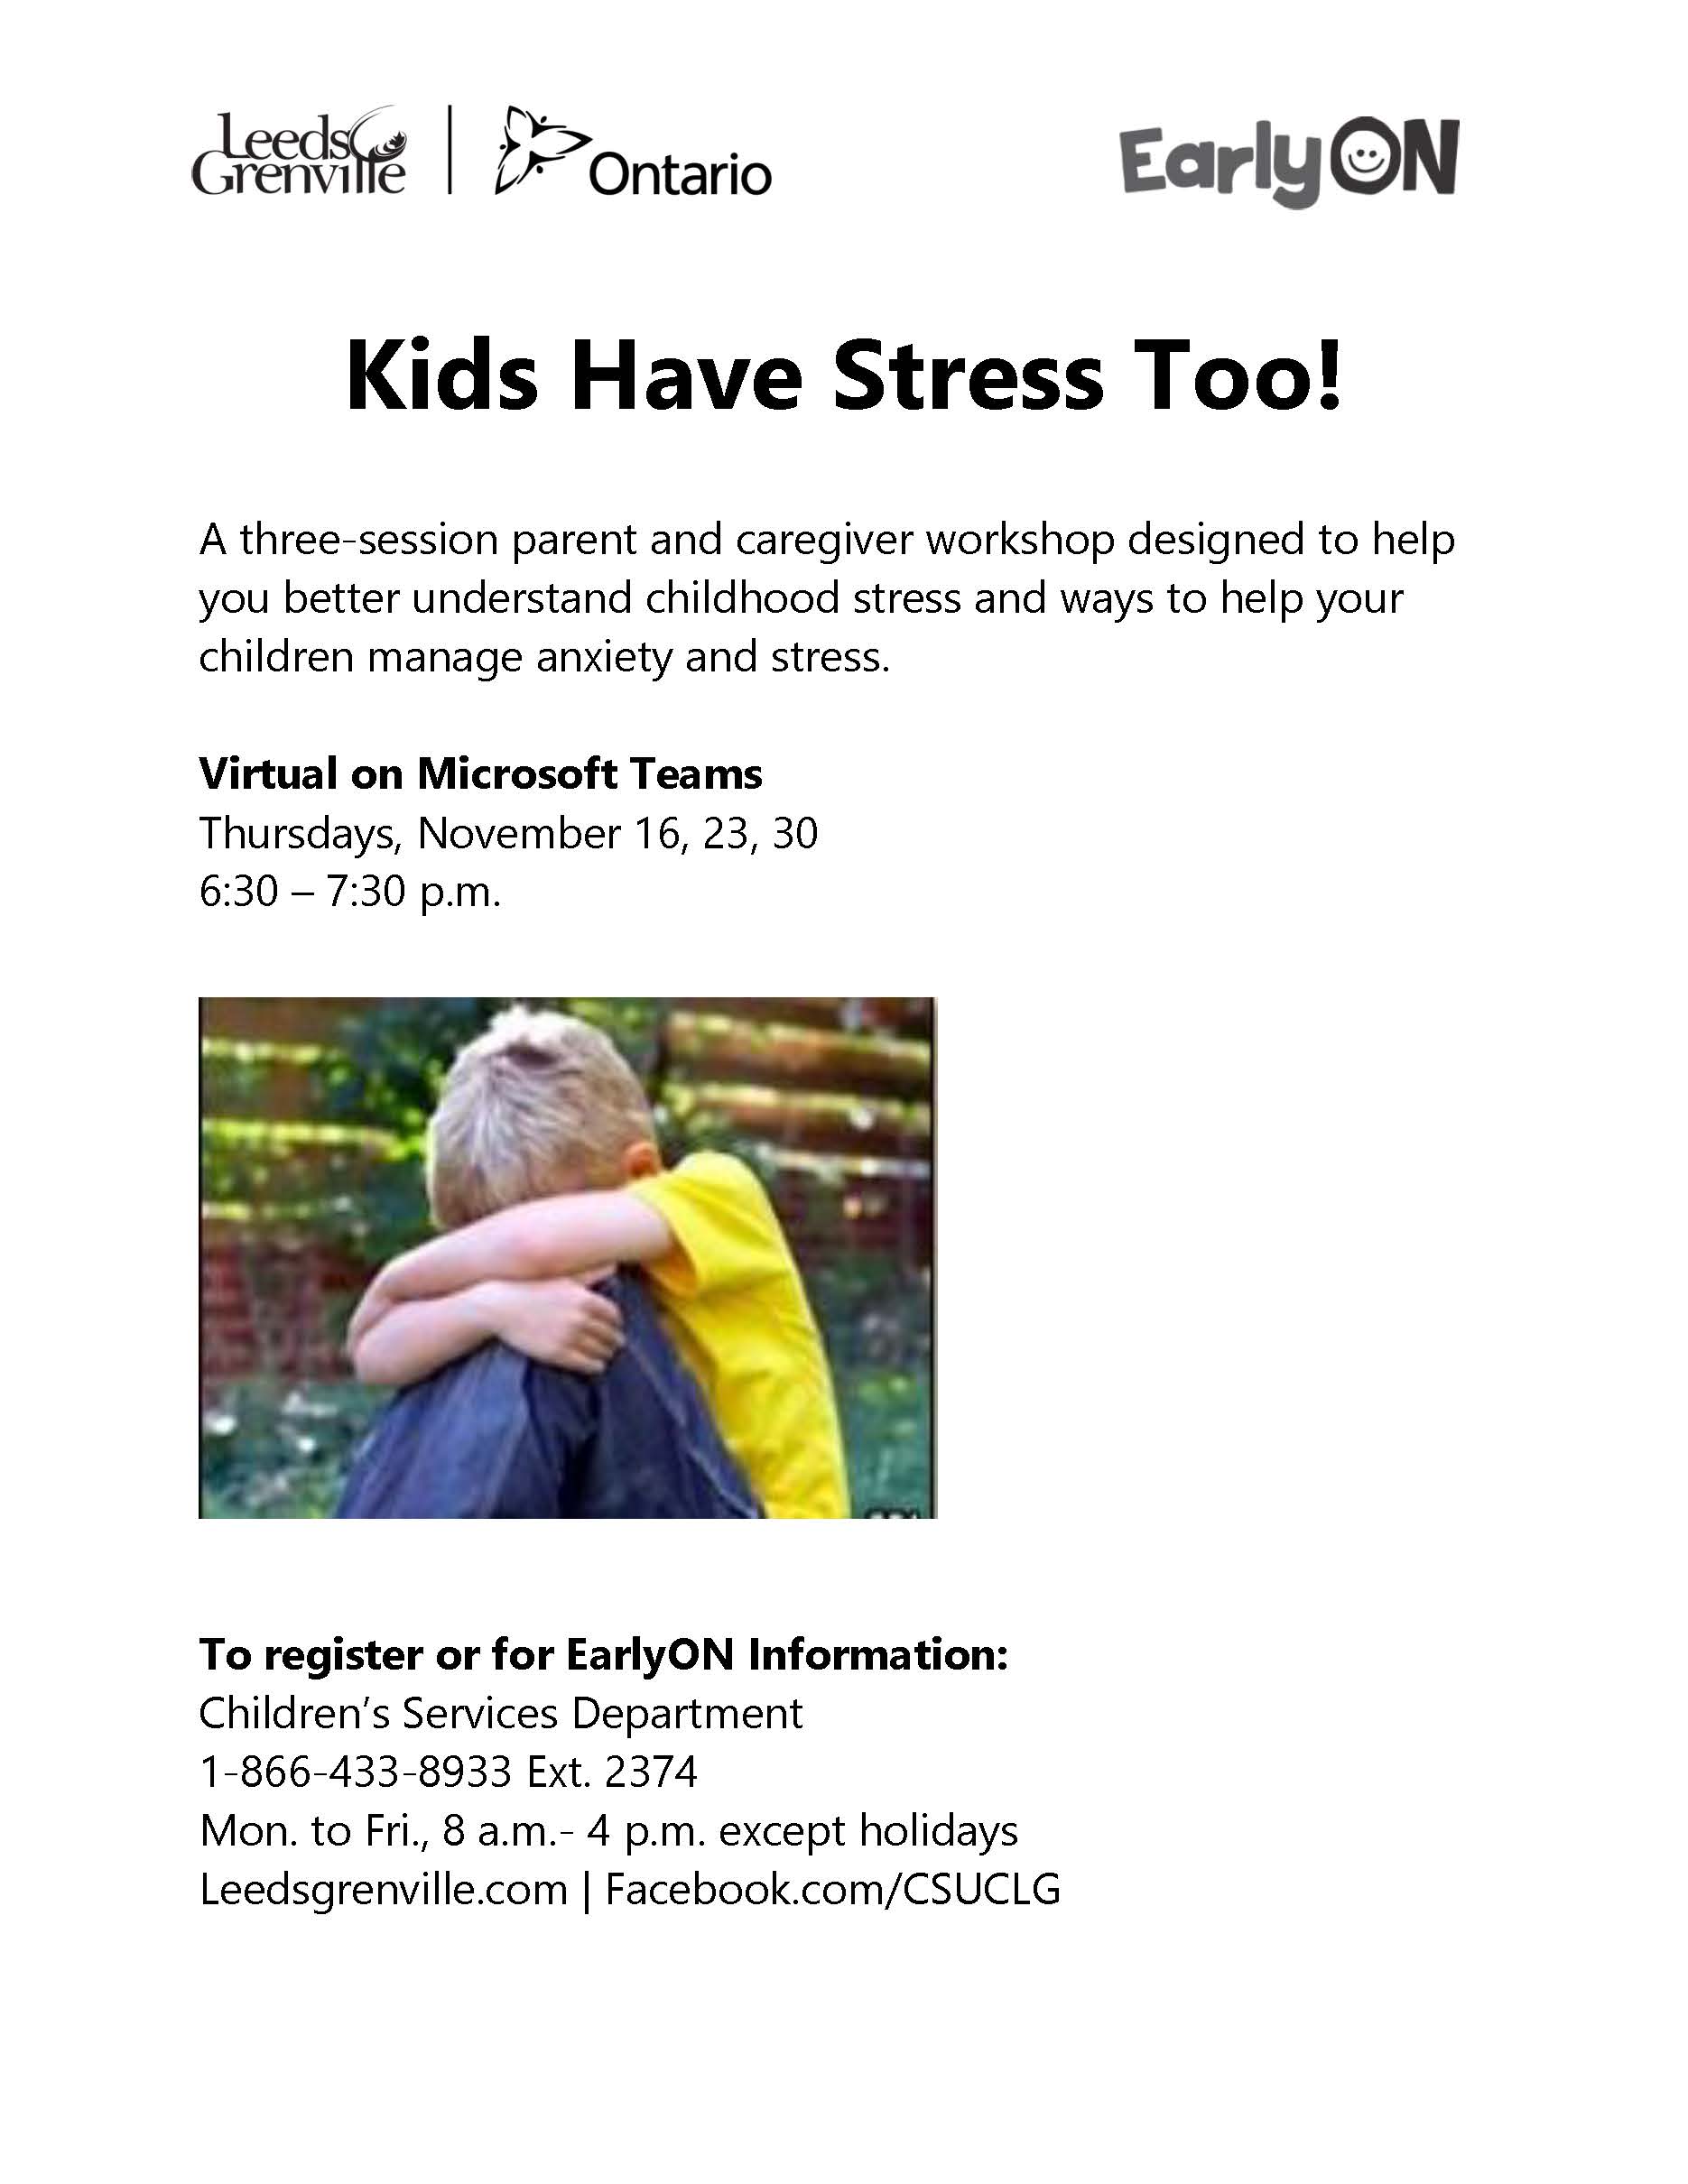 Kids Have Stress Too Workshops @ Virtual - Microsoft Teams